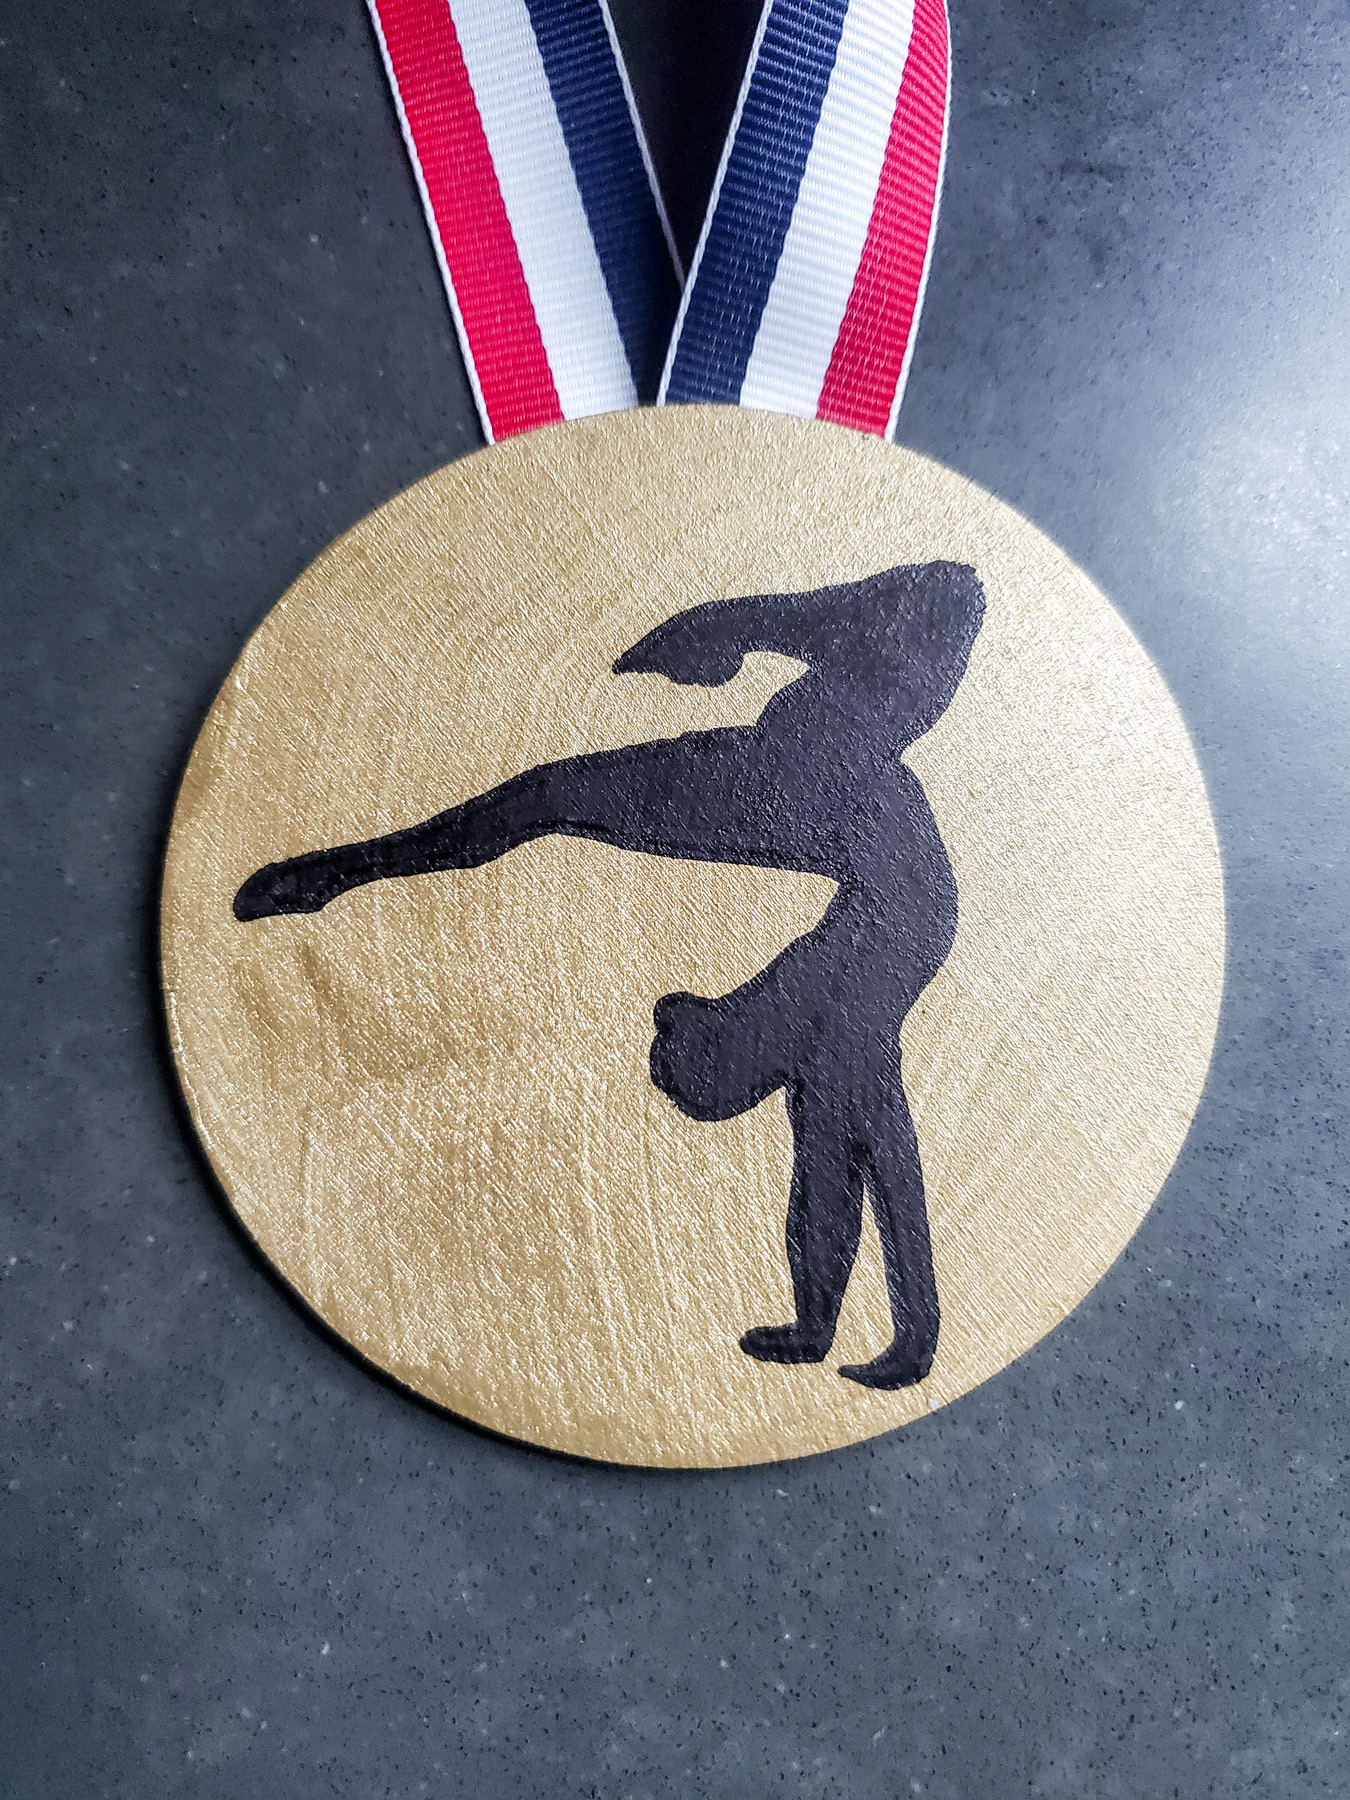 DIY gold medal for gymnast halloween costume